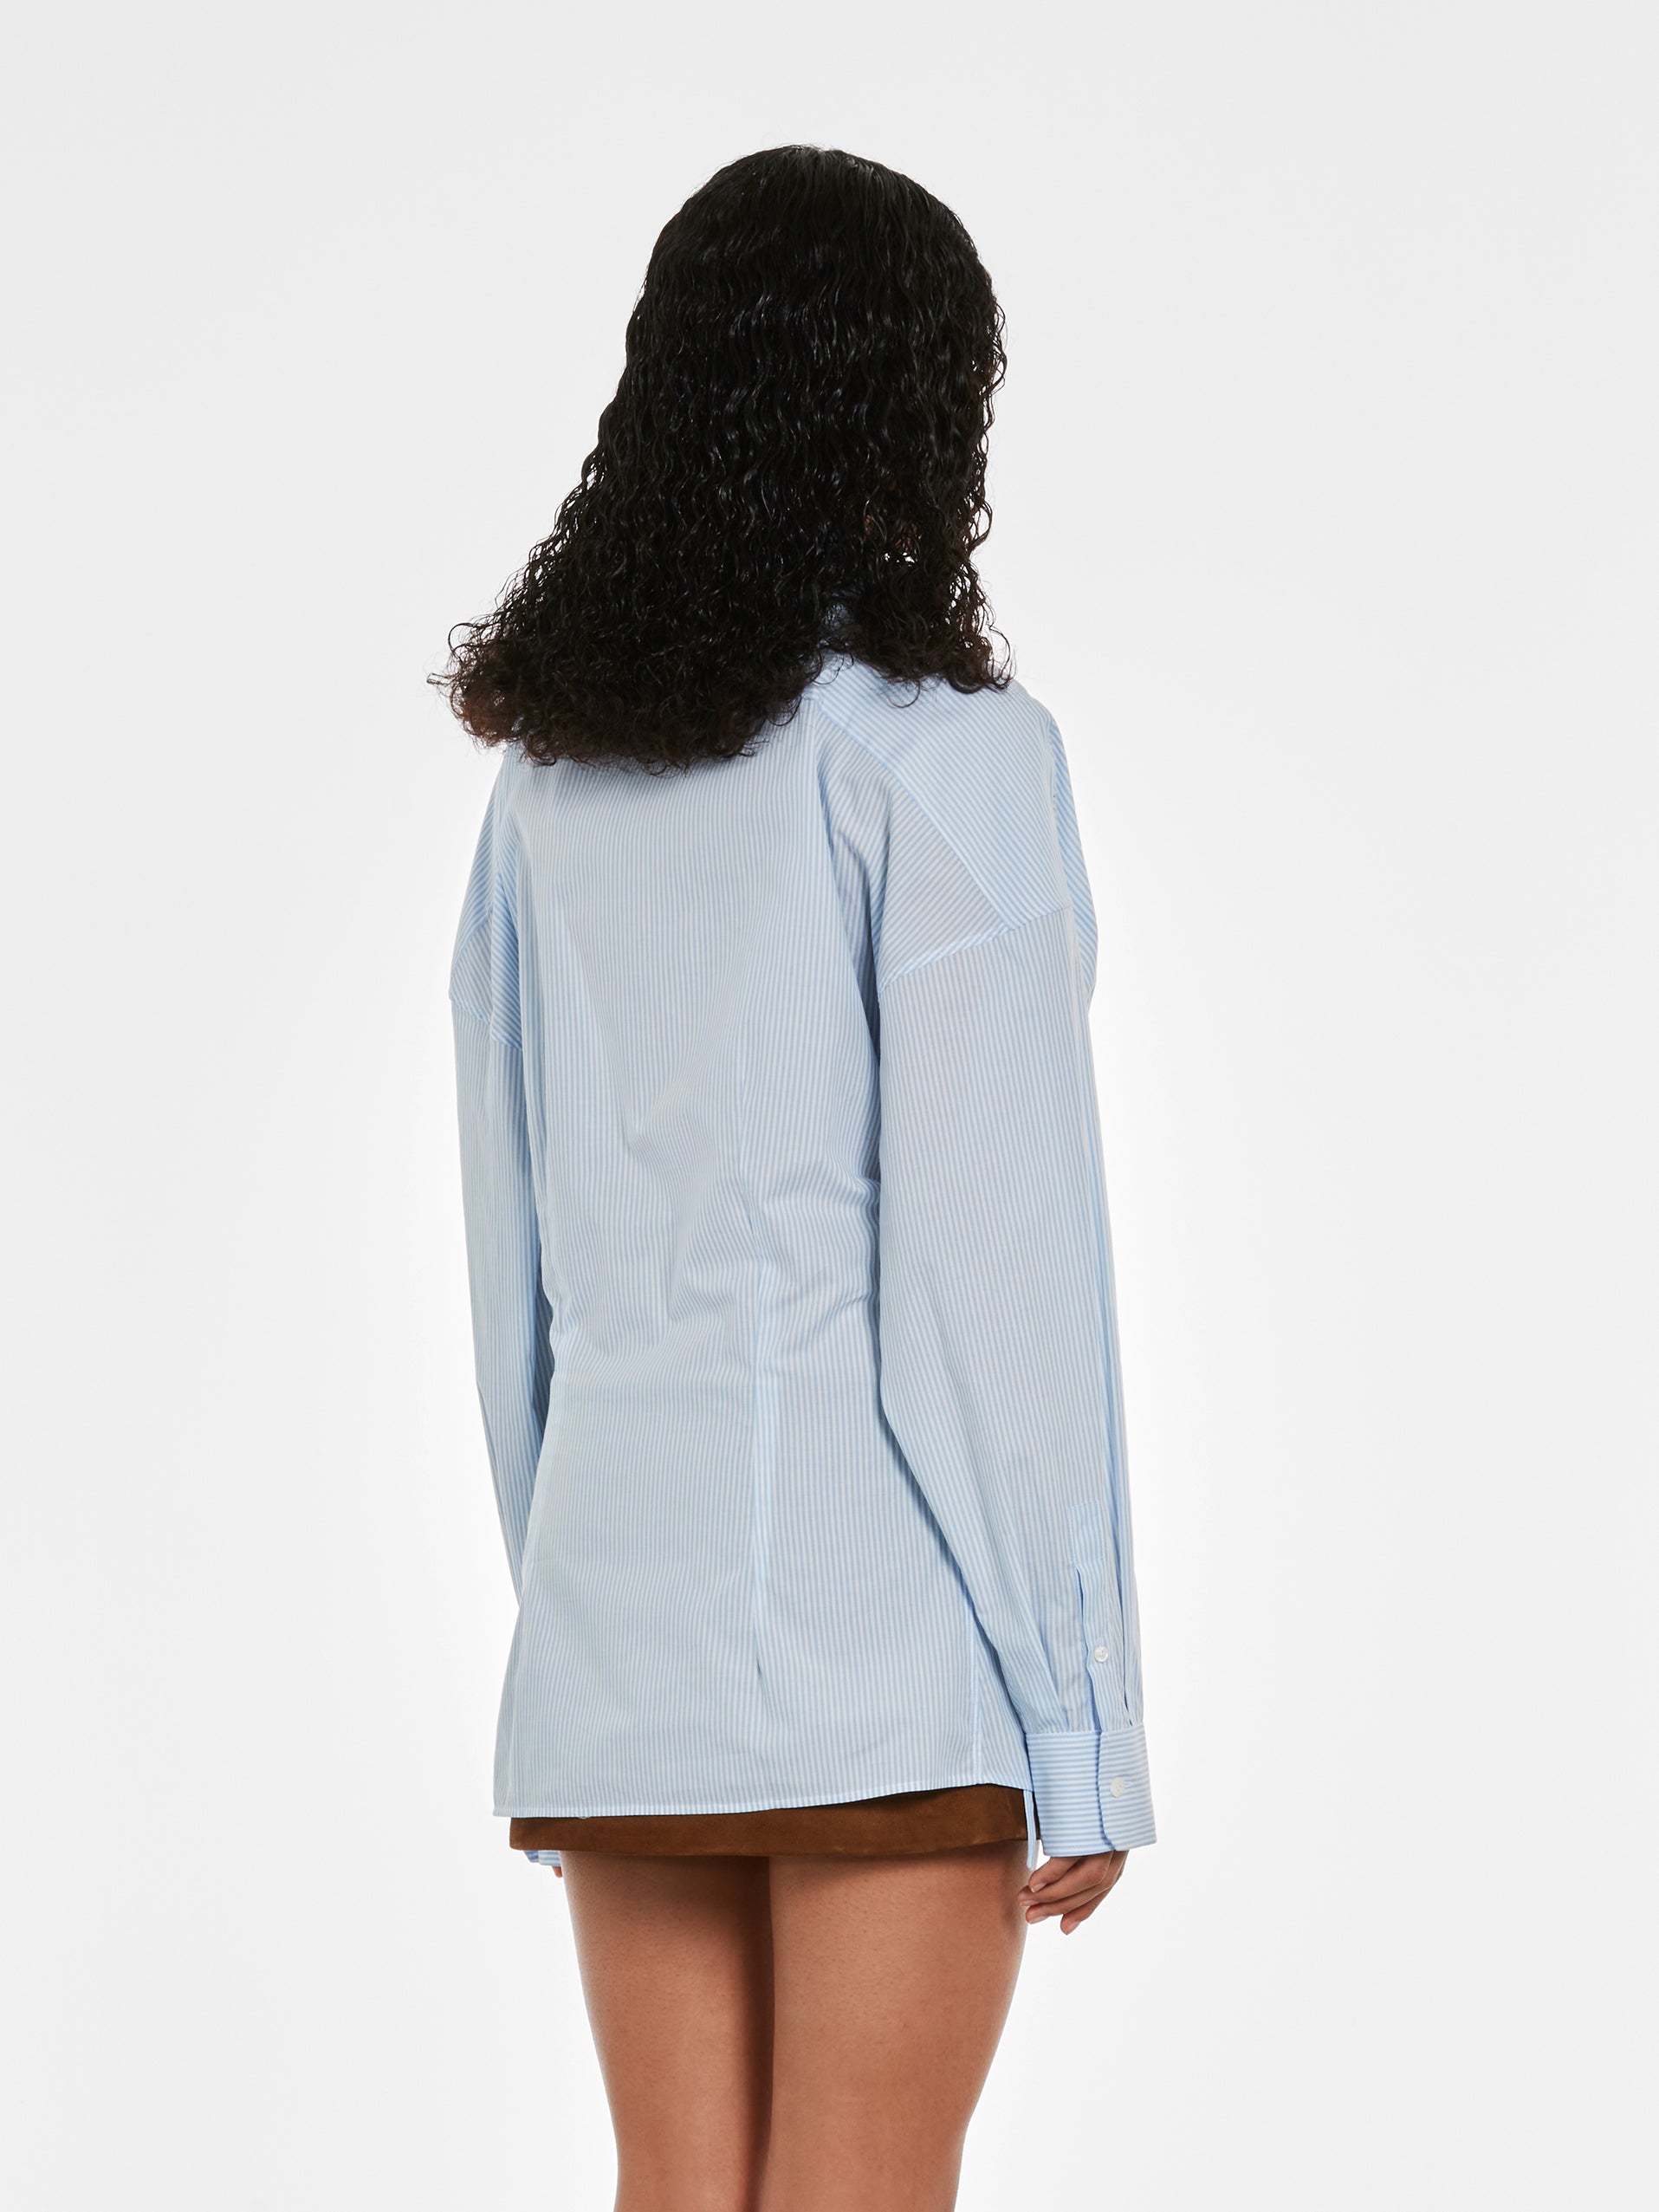 Prada - Women’s Shirt With Pin - (Blue Stripe) view 2